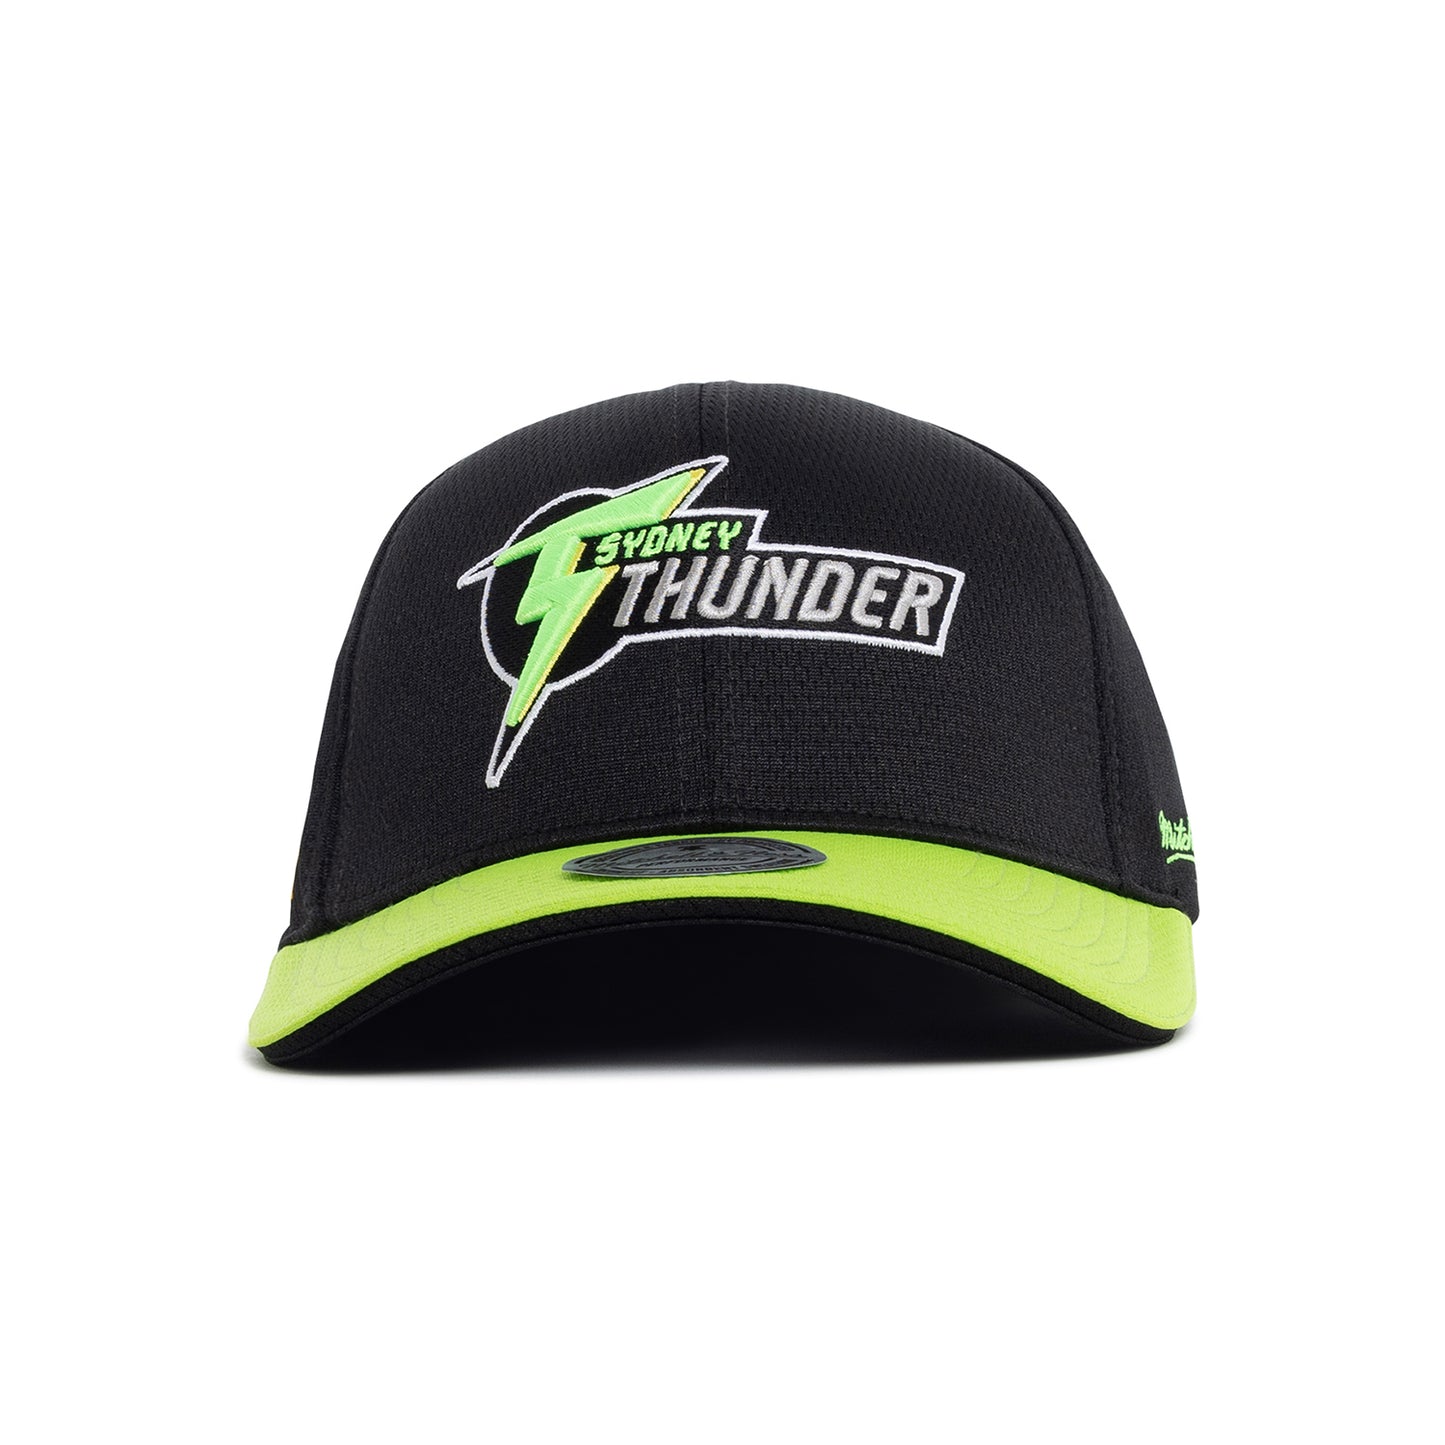 Sydney Thunder WBBL On-Field Cap